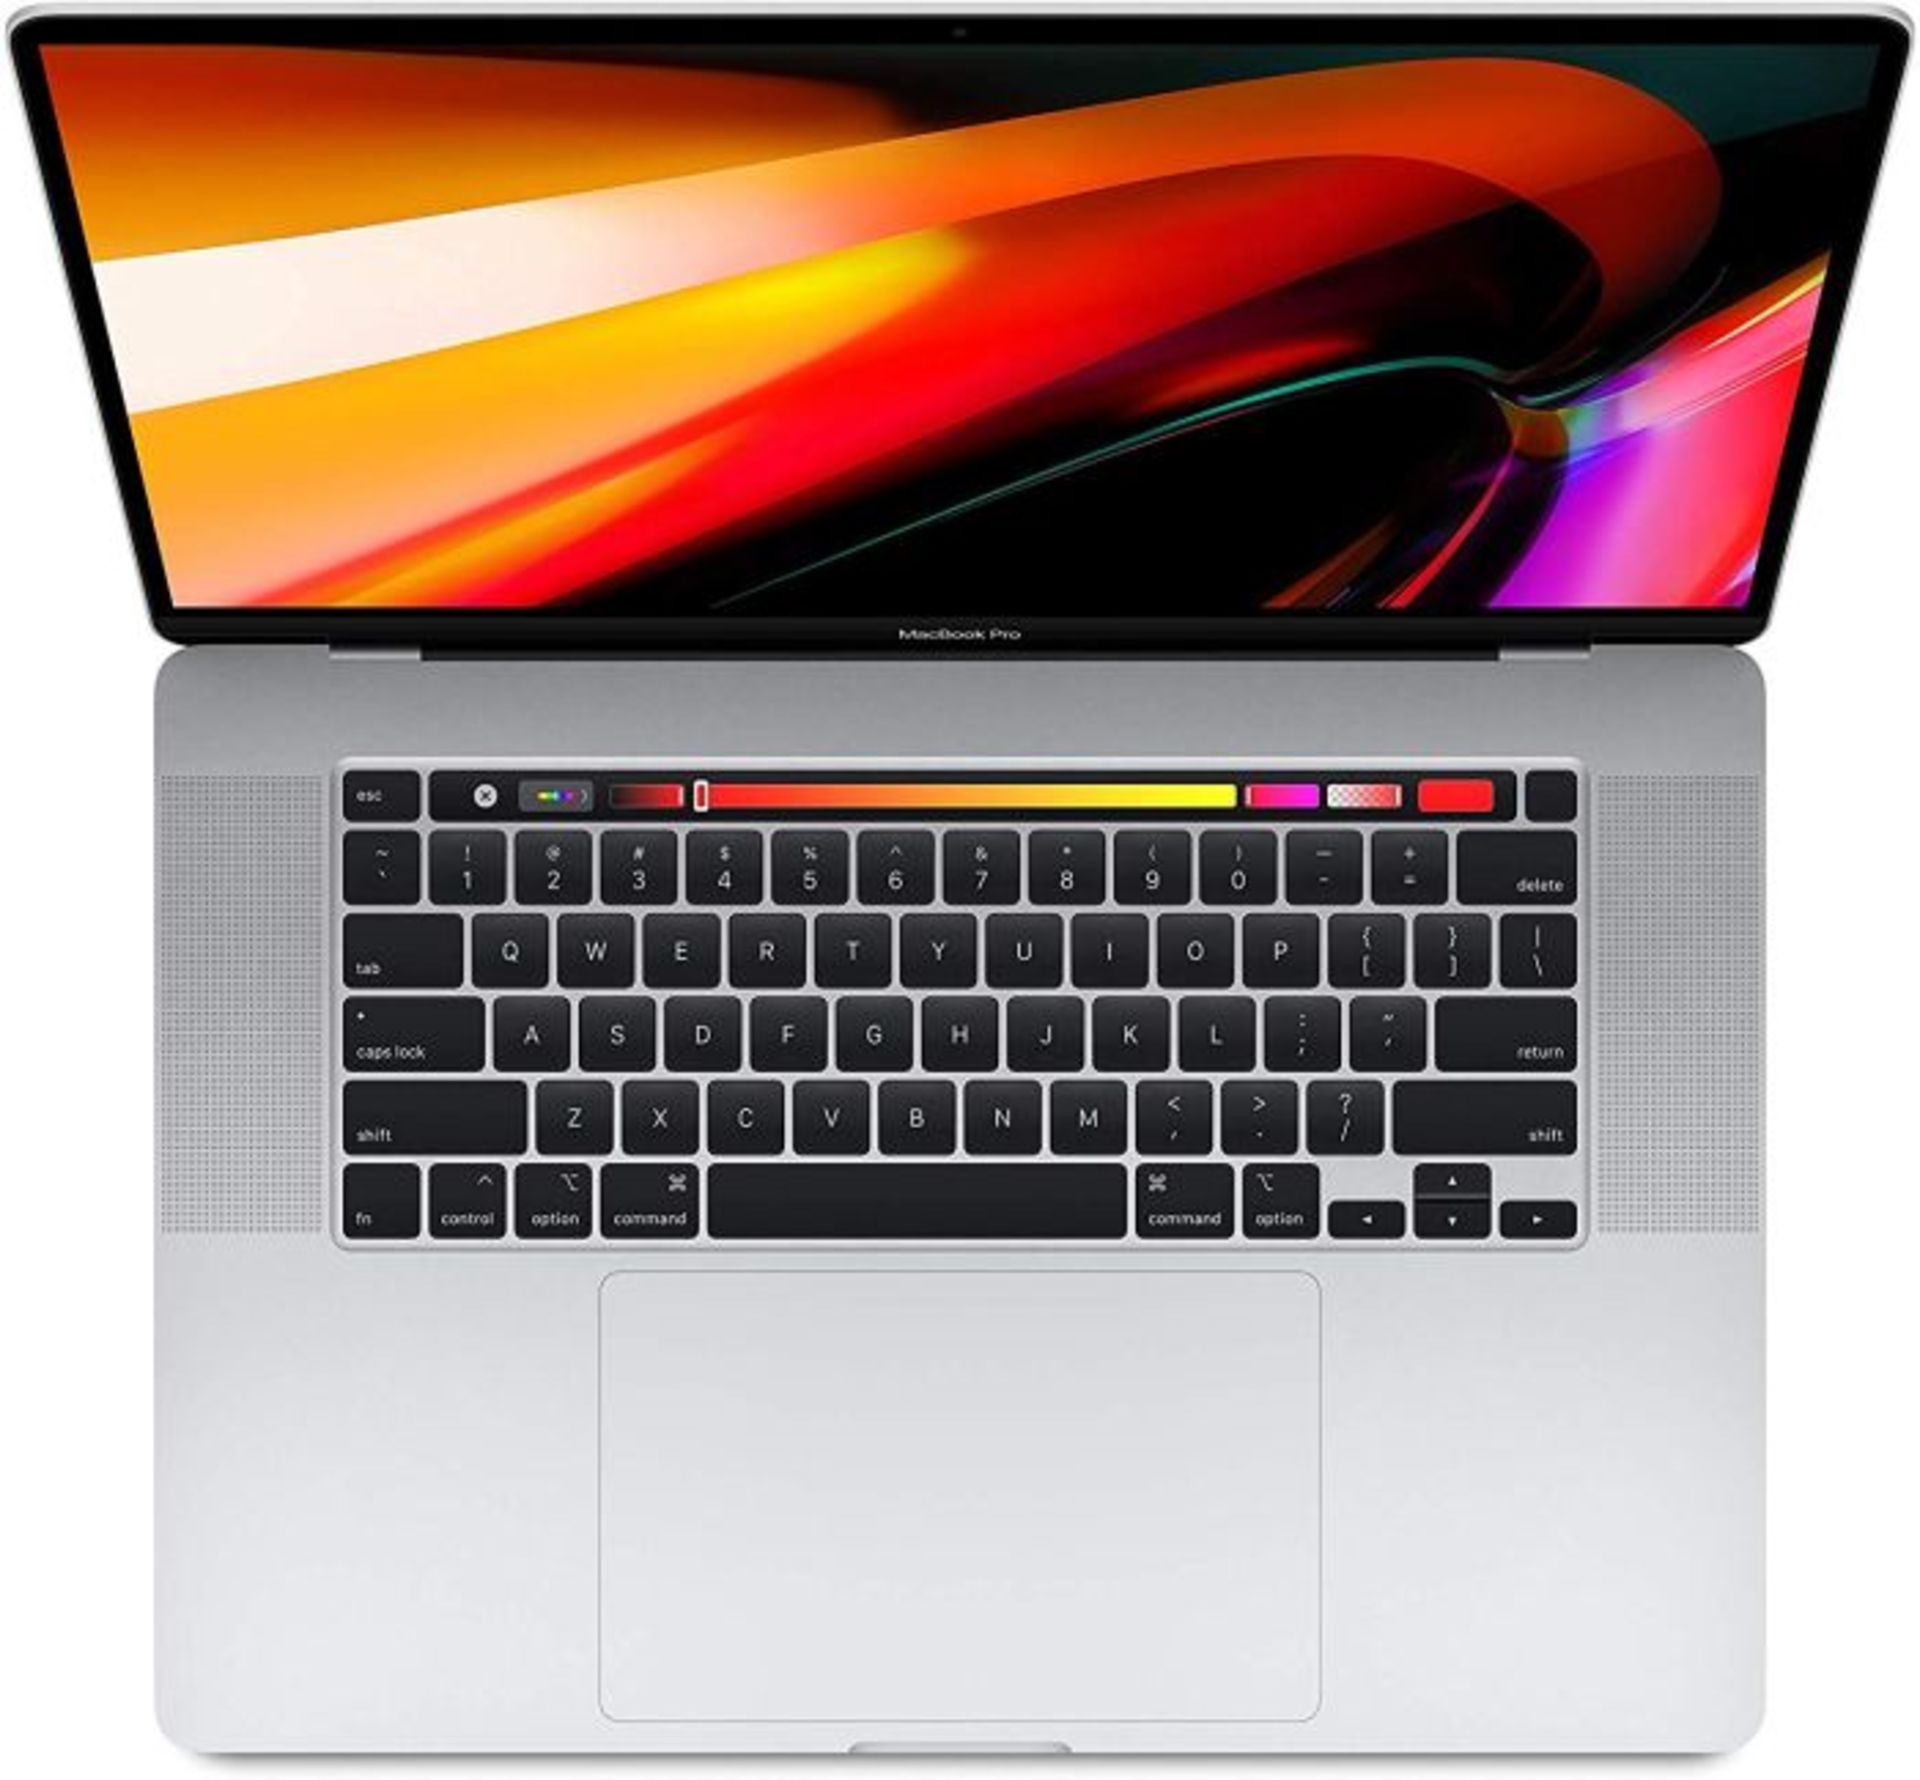 Apple MacBook Pro 15” (2019) Silver OS Sonoma Core i7-9750H 16GB DDR4 256GB SSD Webcam OffIce